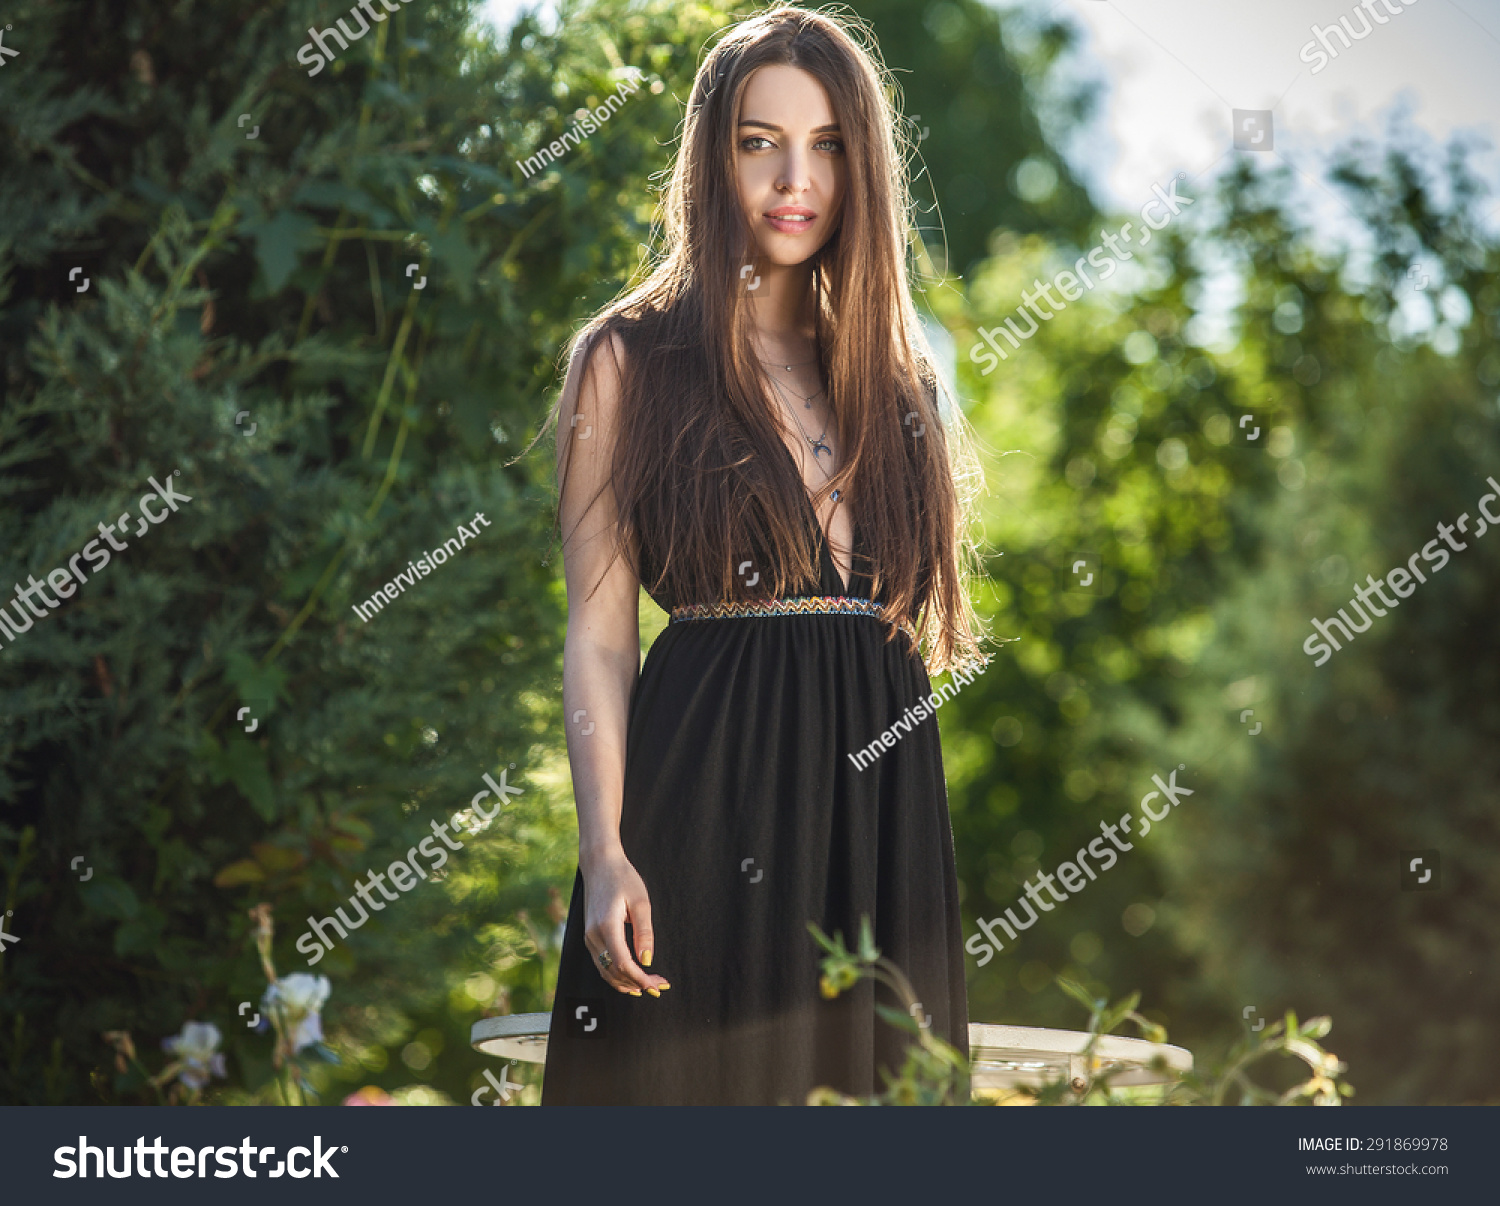 Outdoors portrait of beautiful young woman in luxury black dress posing in summer garden.
 #291869978